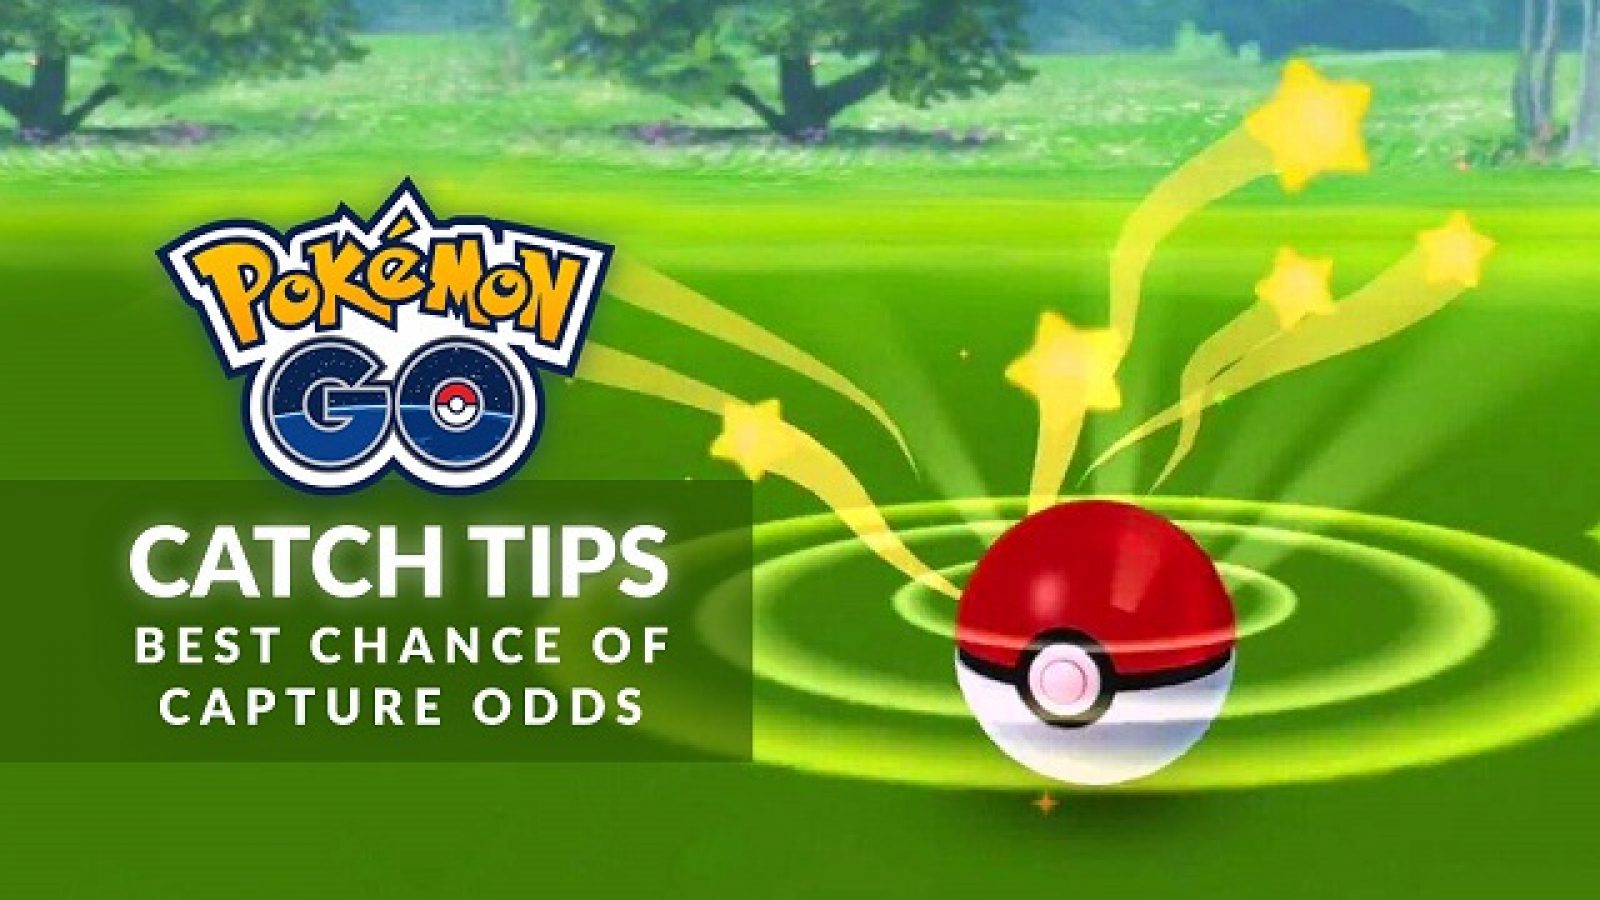 Pokémon Go's rarest Pokémon and how to increase your chances of